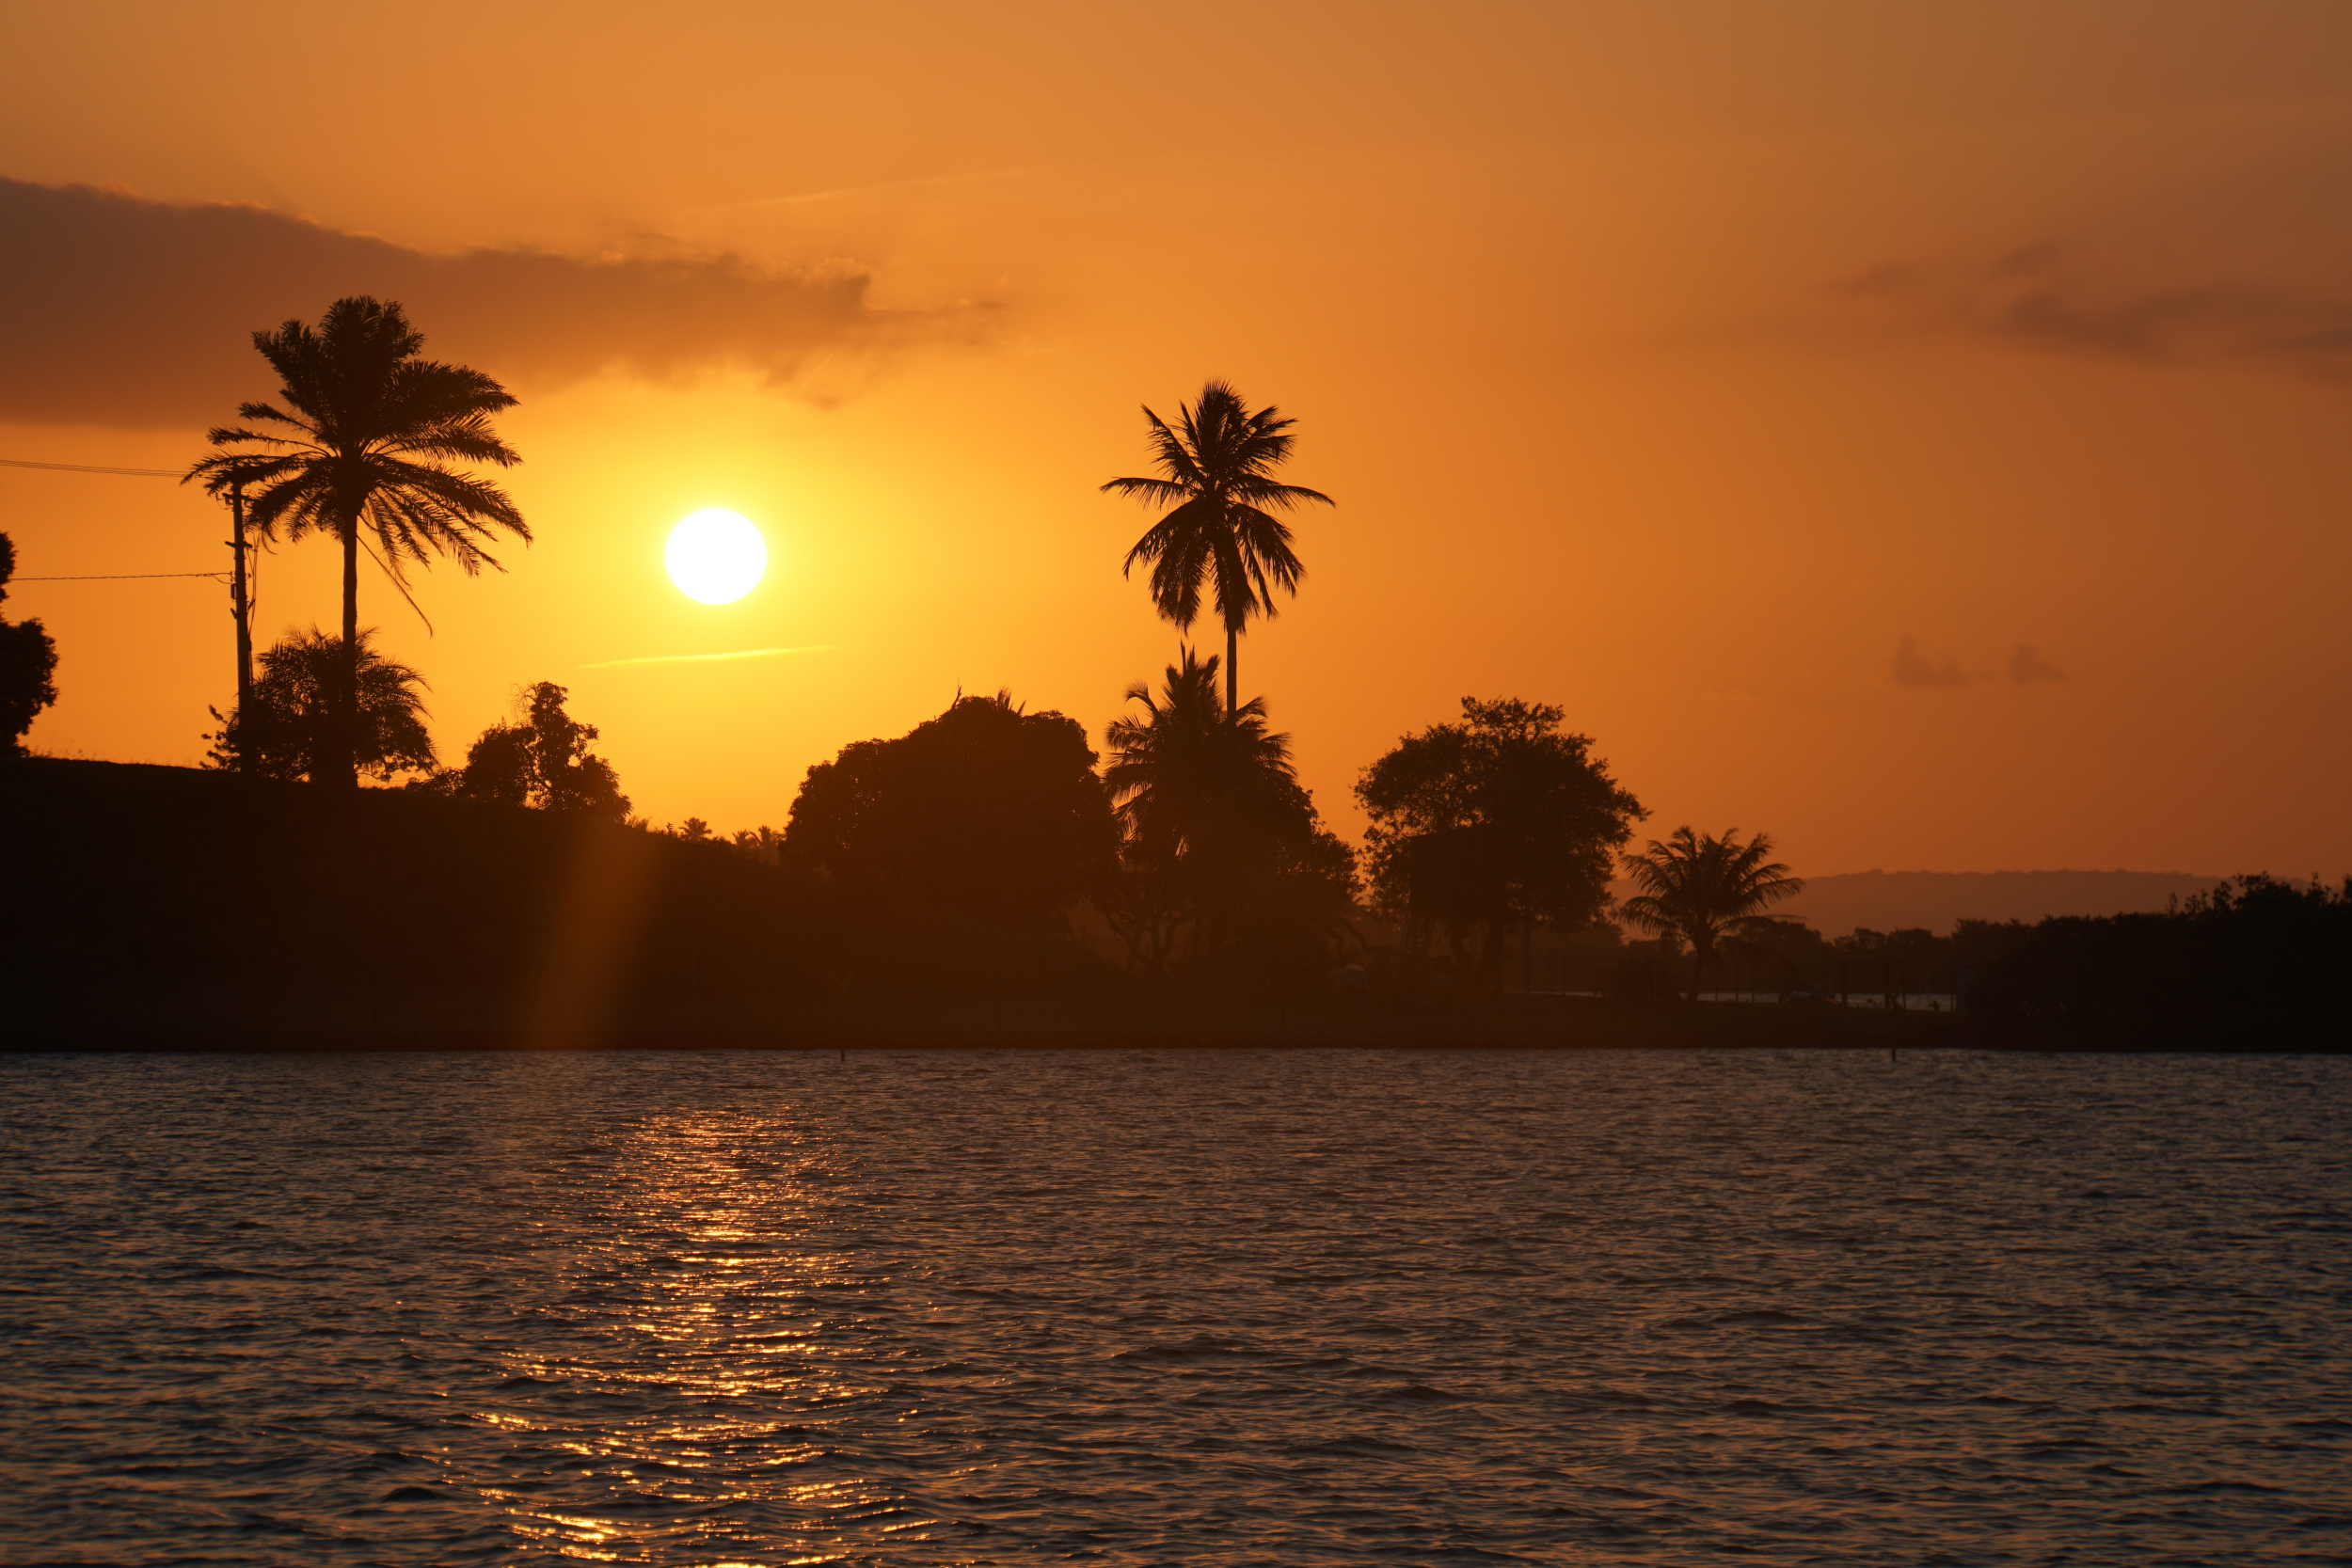 38. Sunset on Ilha de Frade